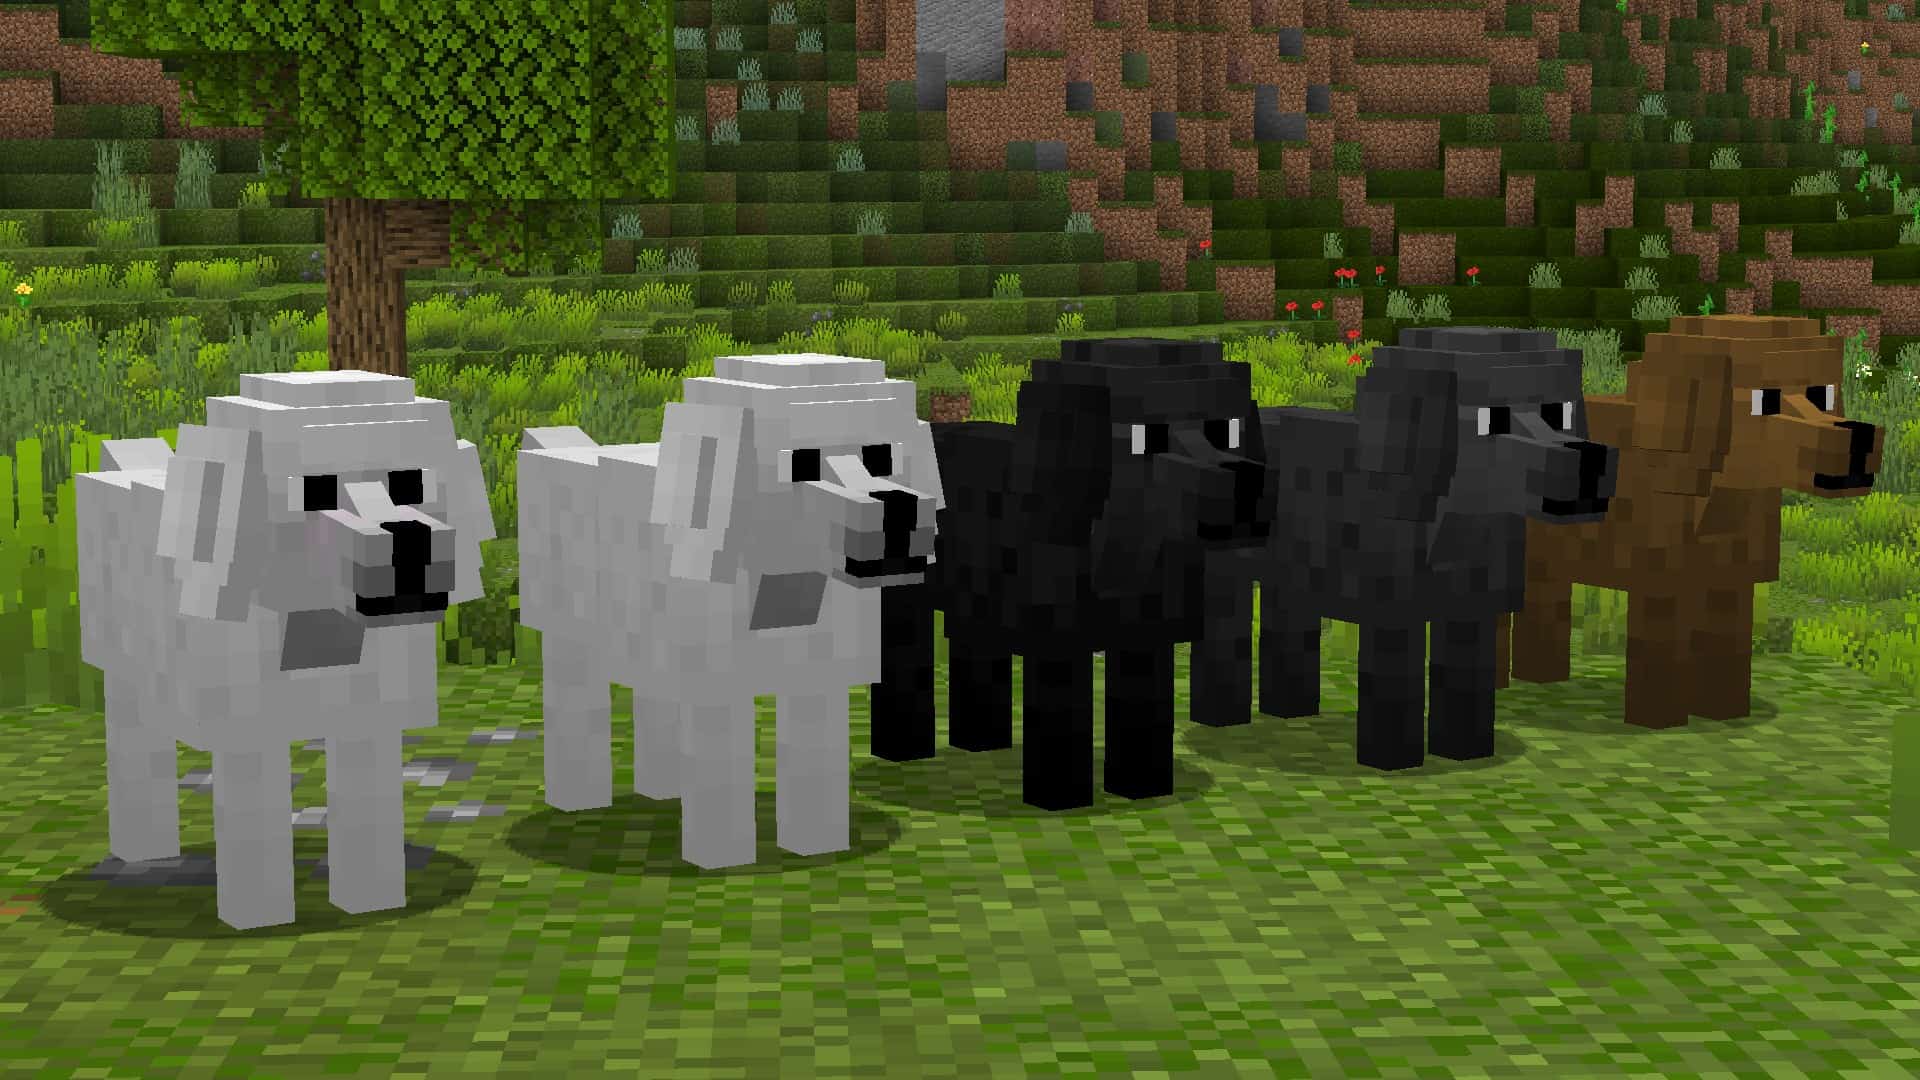 Dogs Minecraft